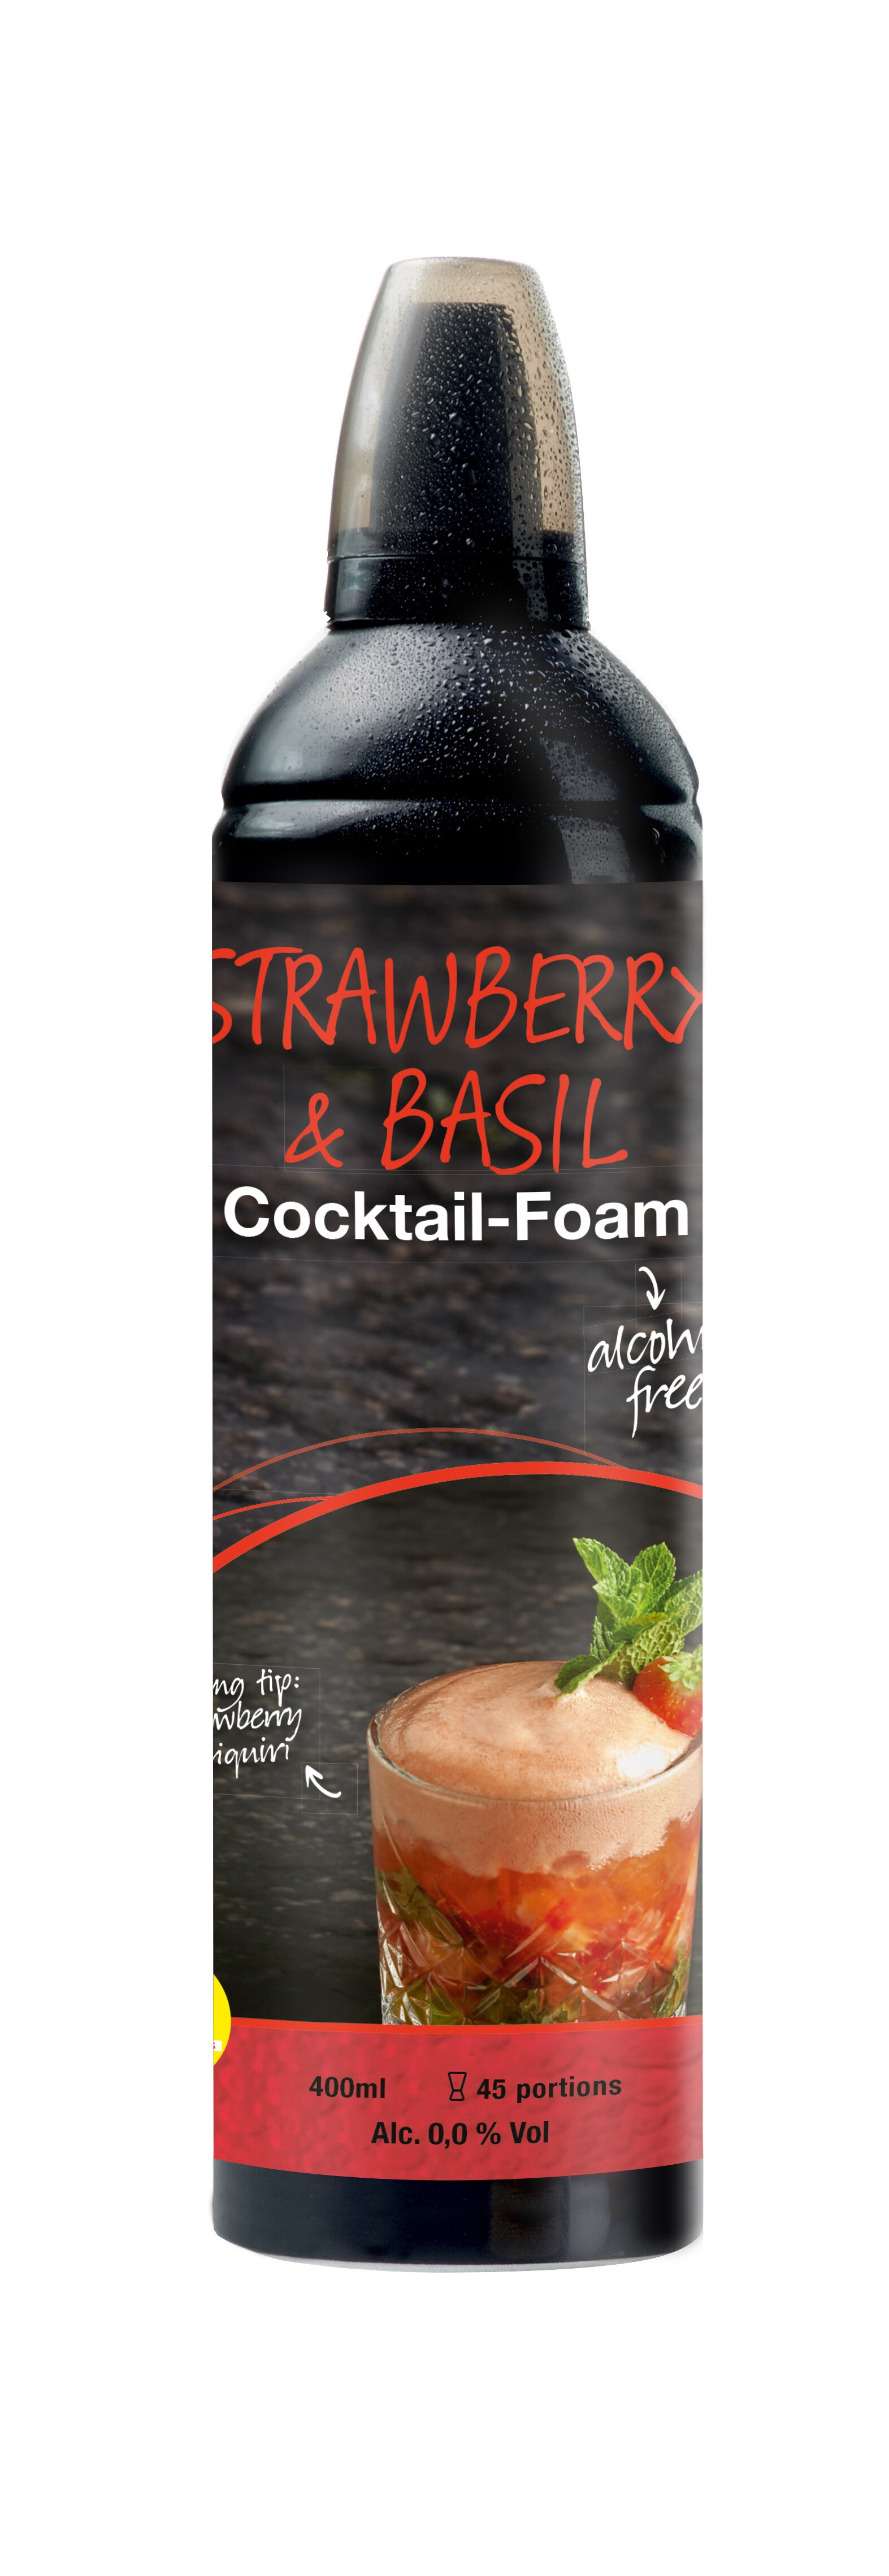 Cocktail EasyFoam Fraise - Basilic 400ml R&D Food Revolution